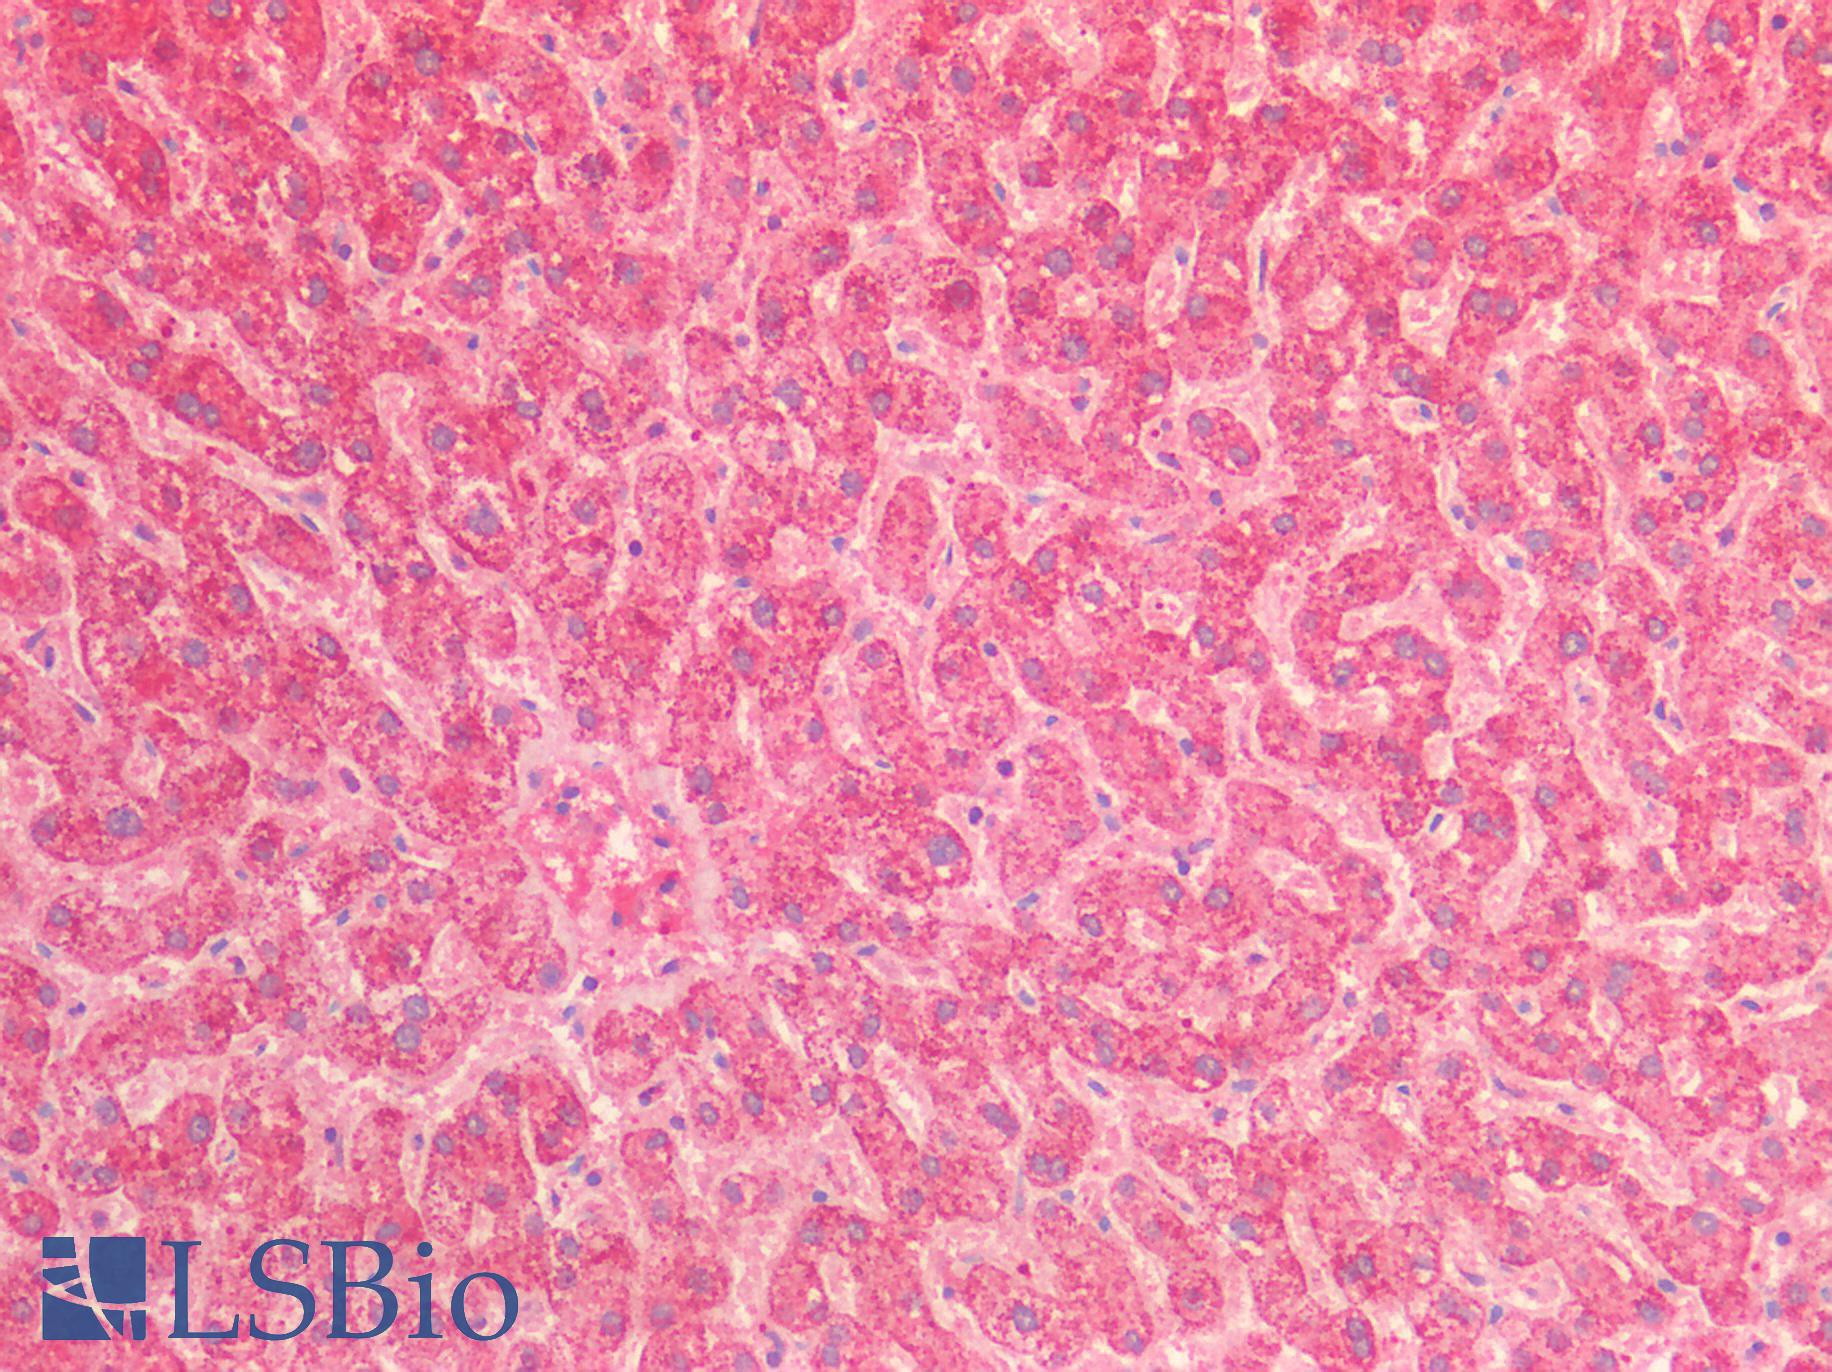 HSPE1 / HSP10 / Chaperonin 10 Antibody - Human Liver: Formalin-Fixed, Paraffin-Embedded (FFPE)